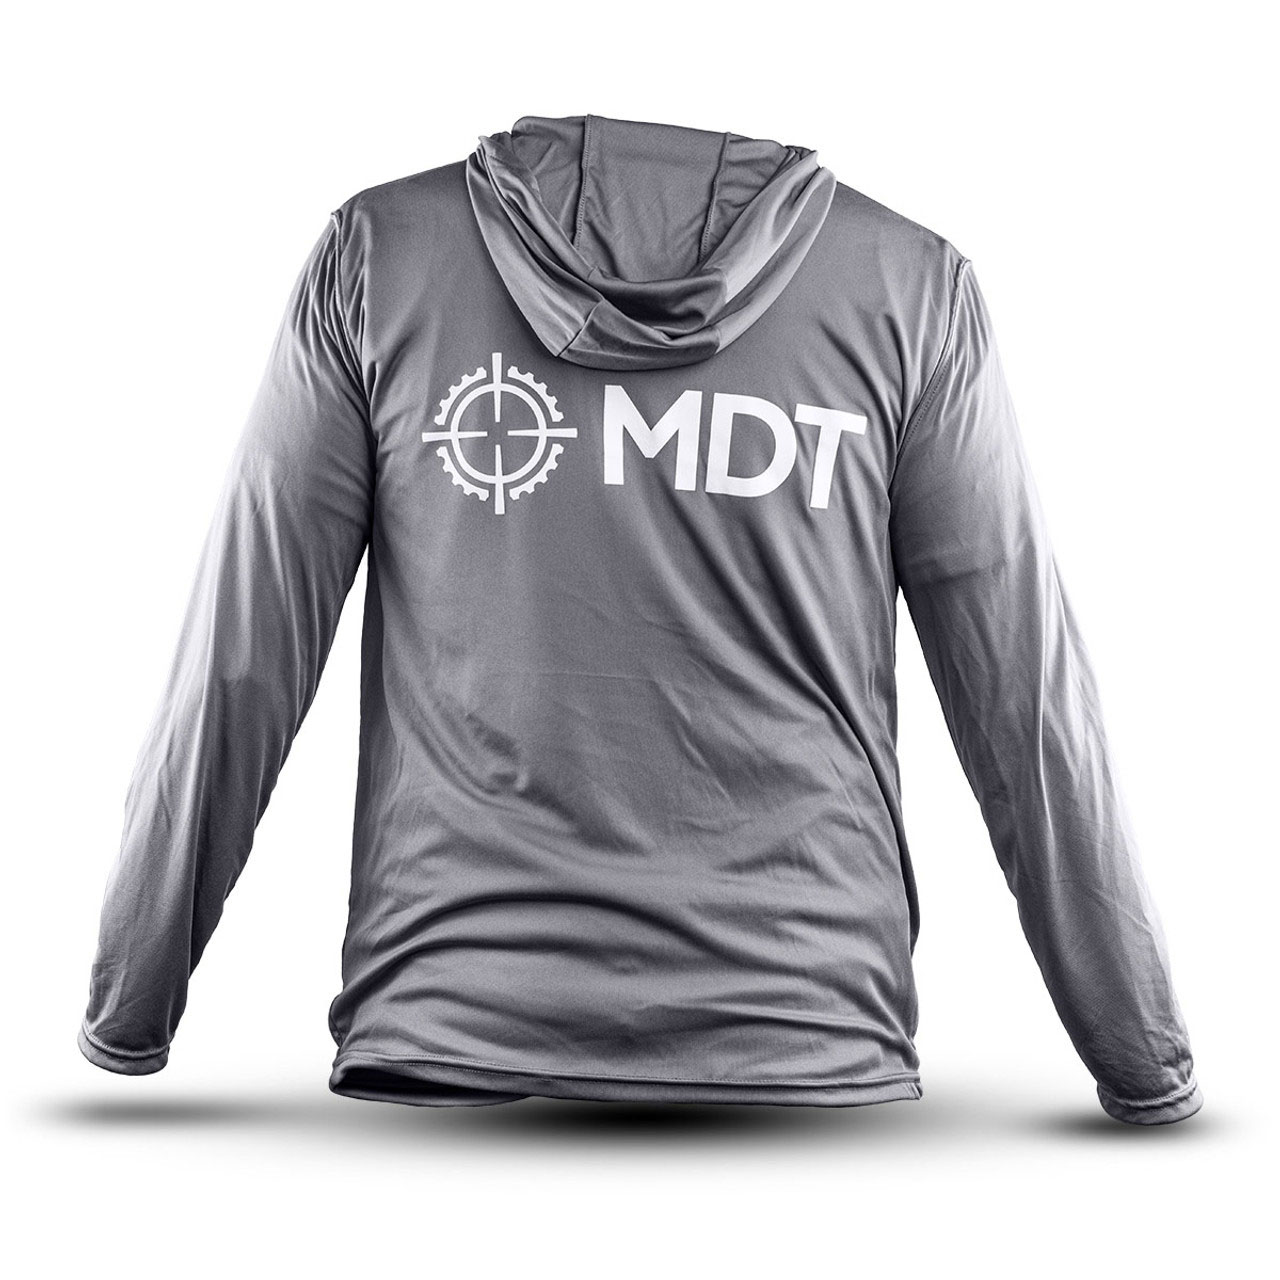 MDT Merchandise - MDT Sun Shirt Hoodies - Unisex - M - GRY